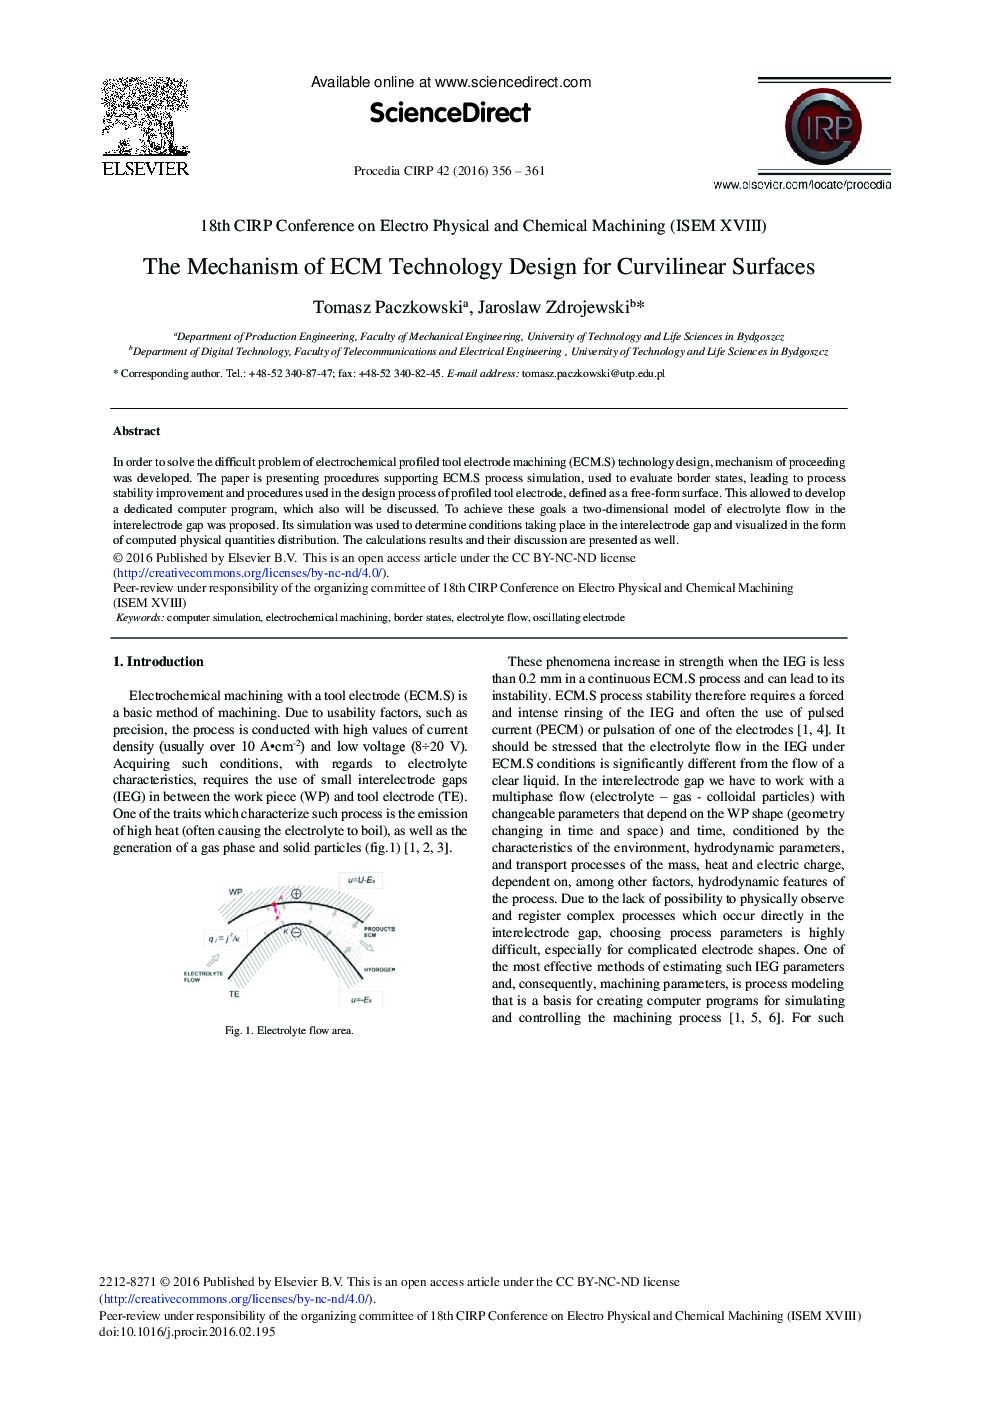 The Mechanism of ECM Technology Design for Curvilinear Surfaces 